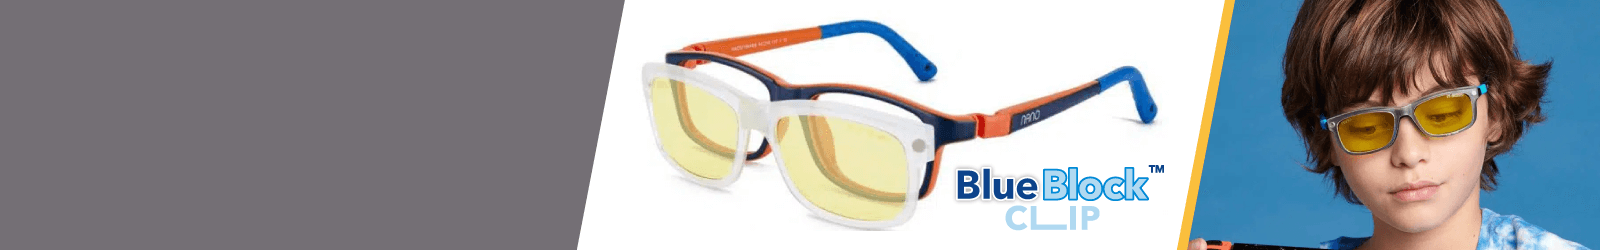 Nano Blue Block Clip Eyewear for Kids